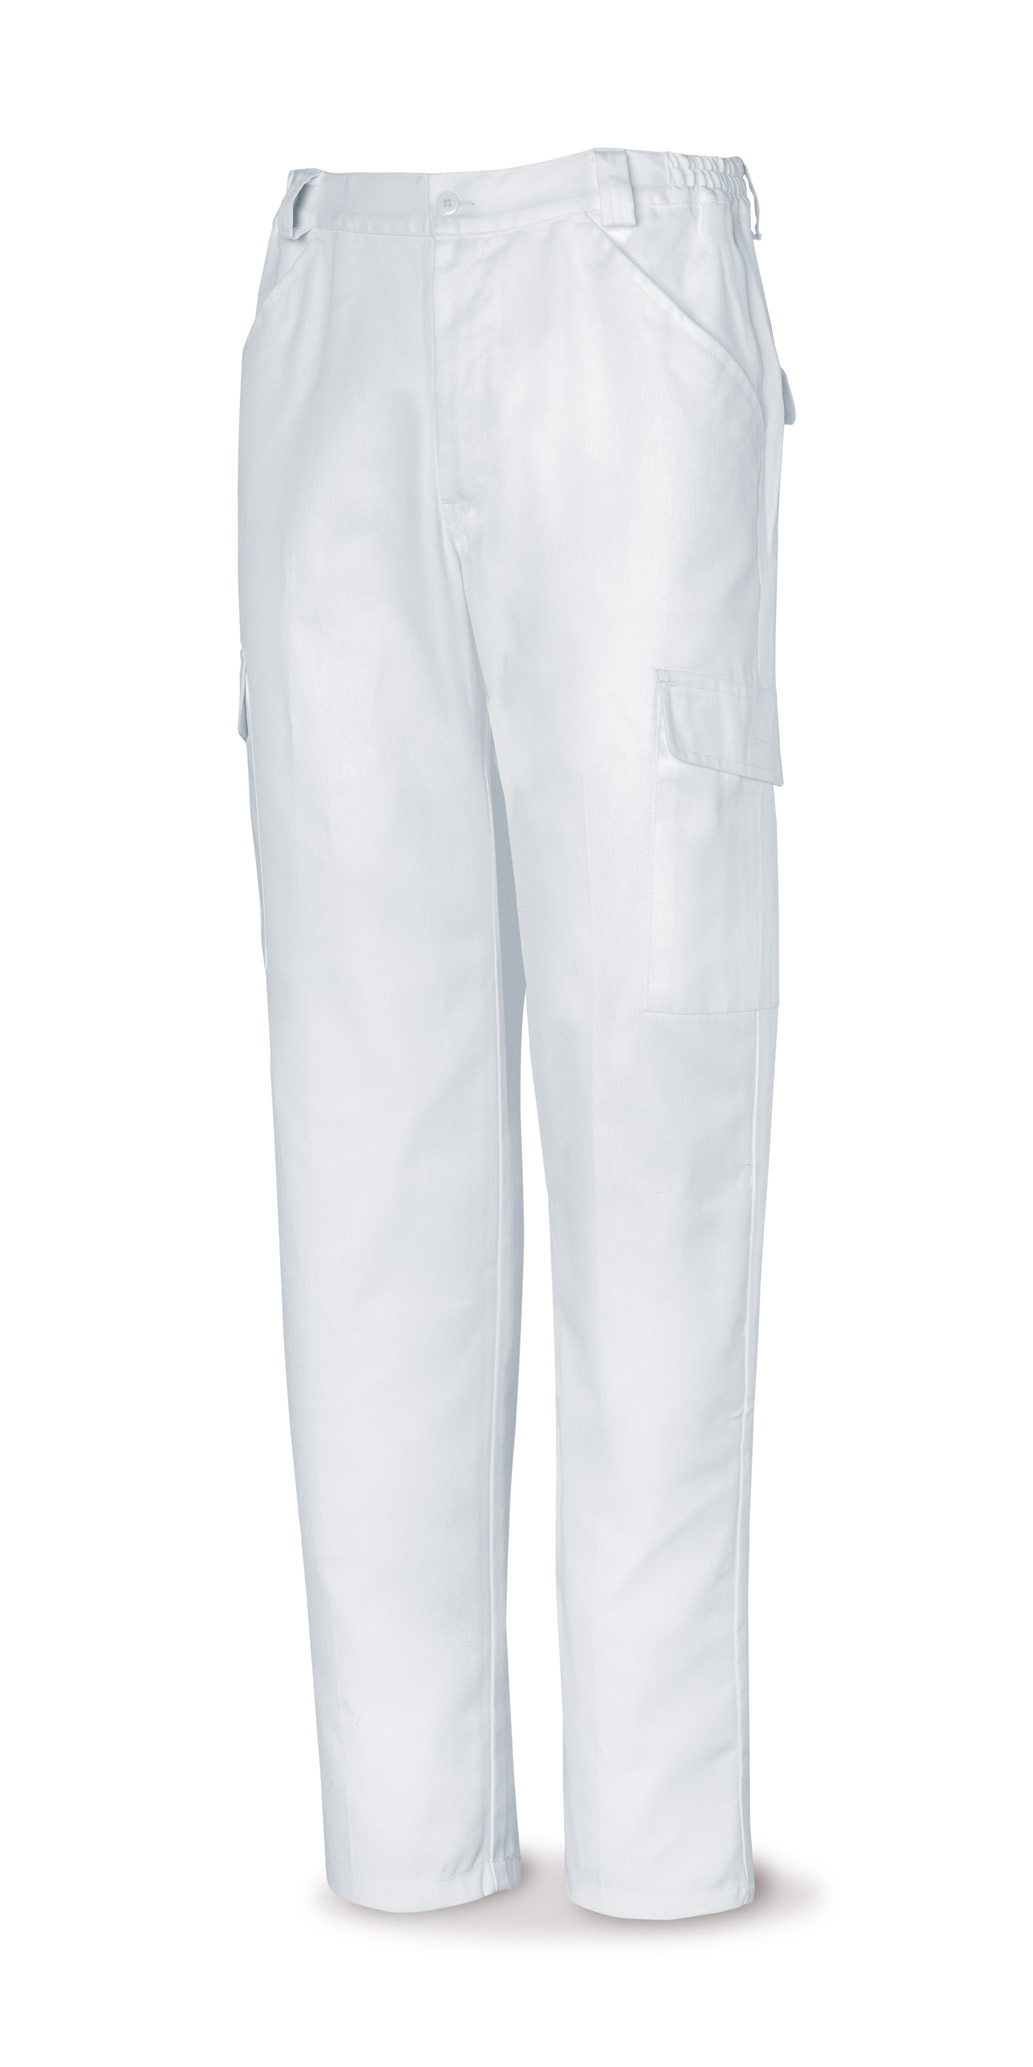 388-PB Workwear Basic Line Tergal. White. 